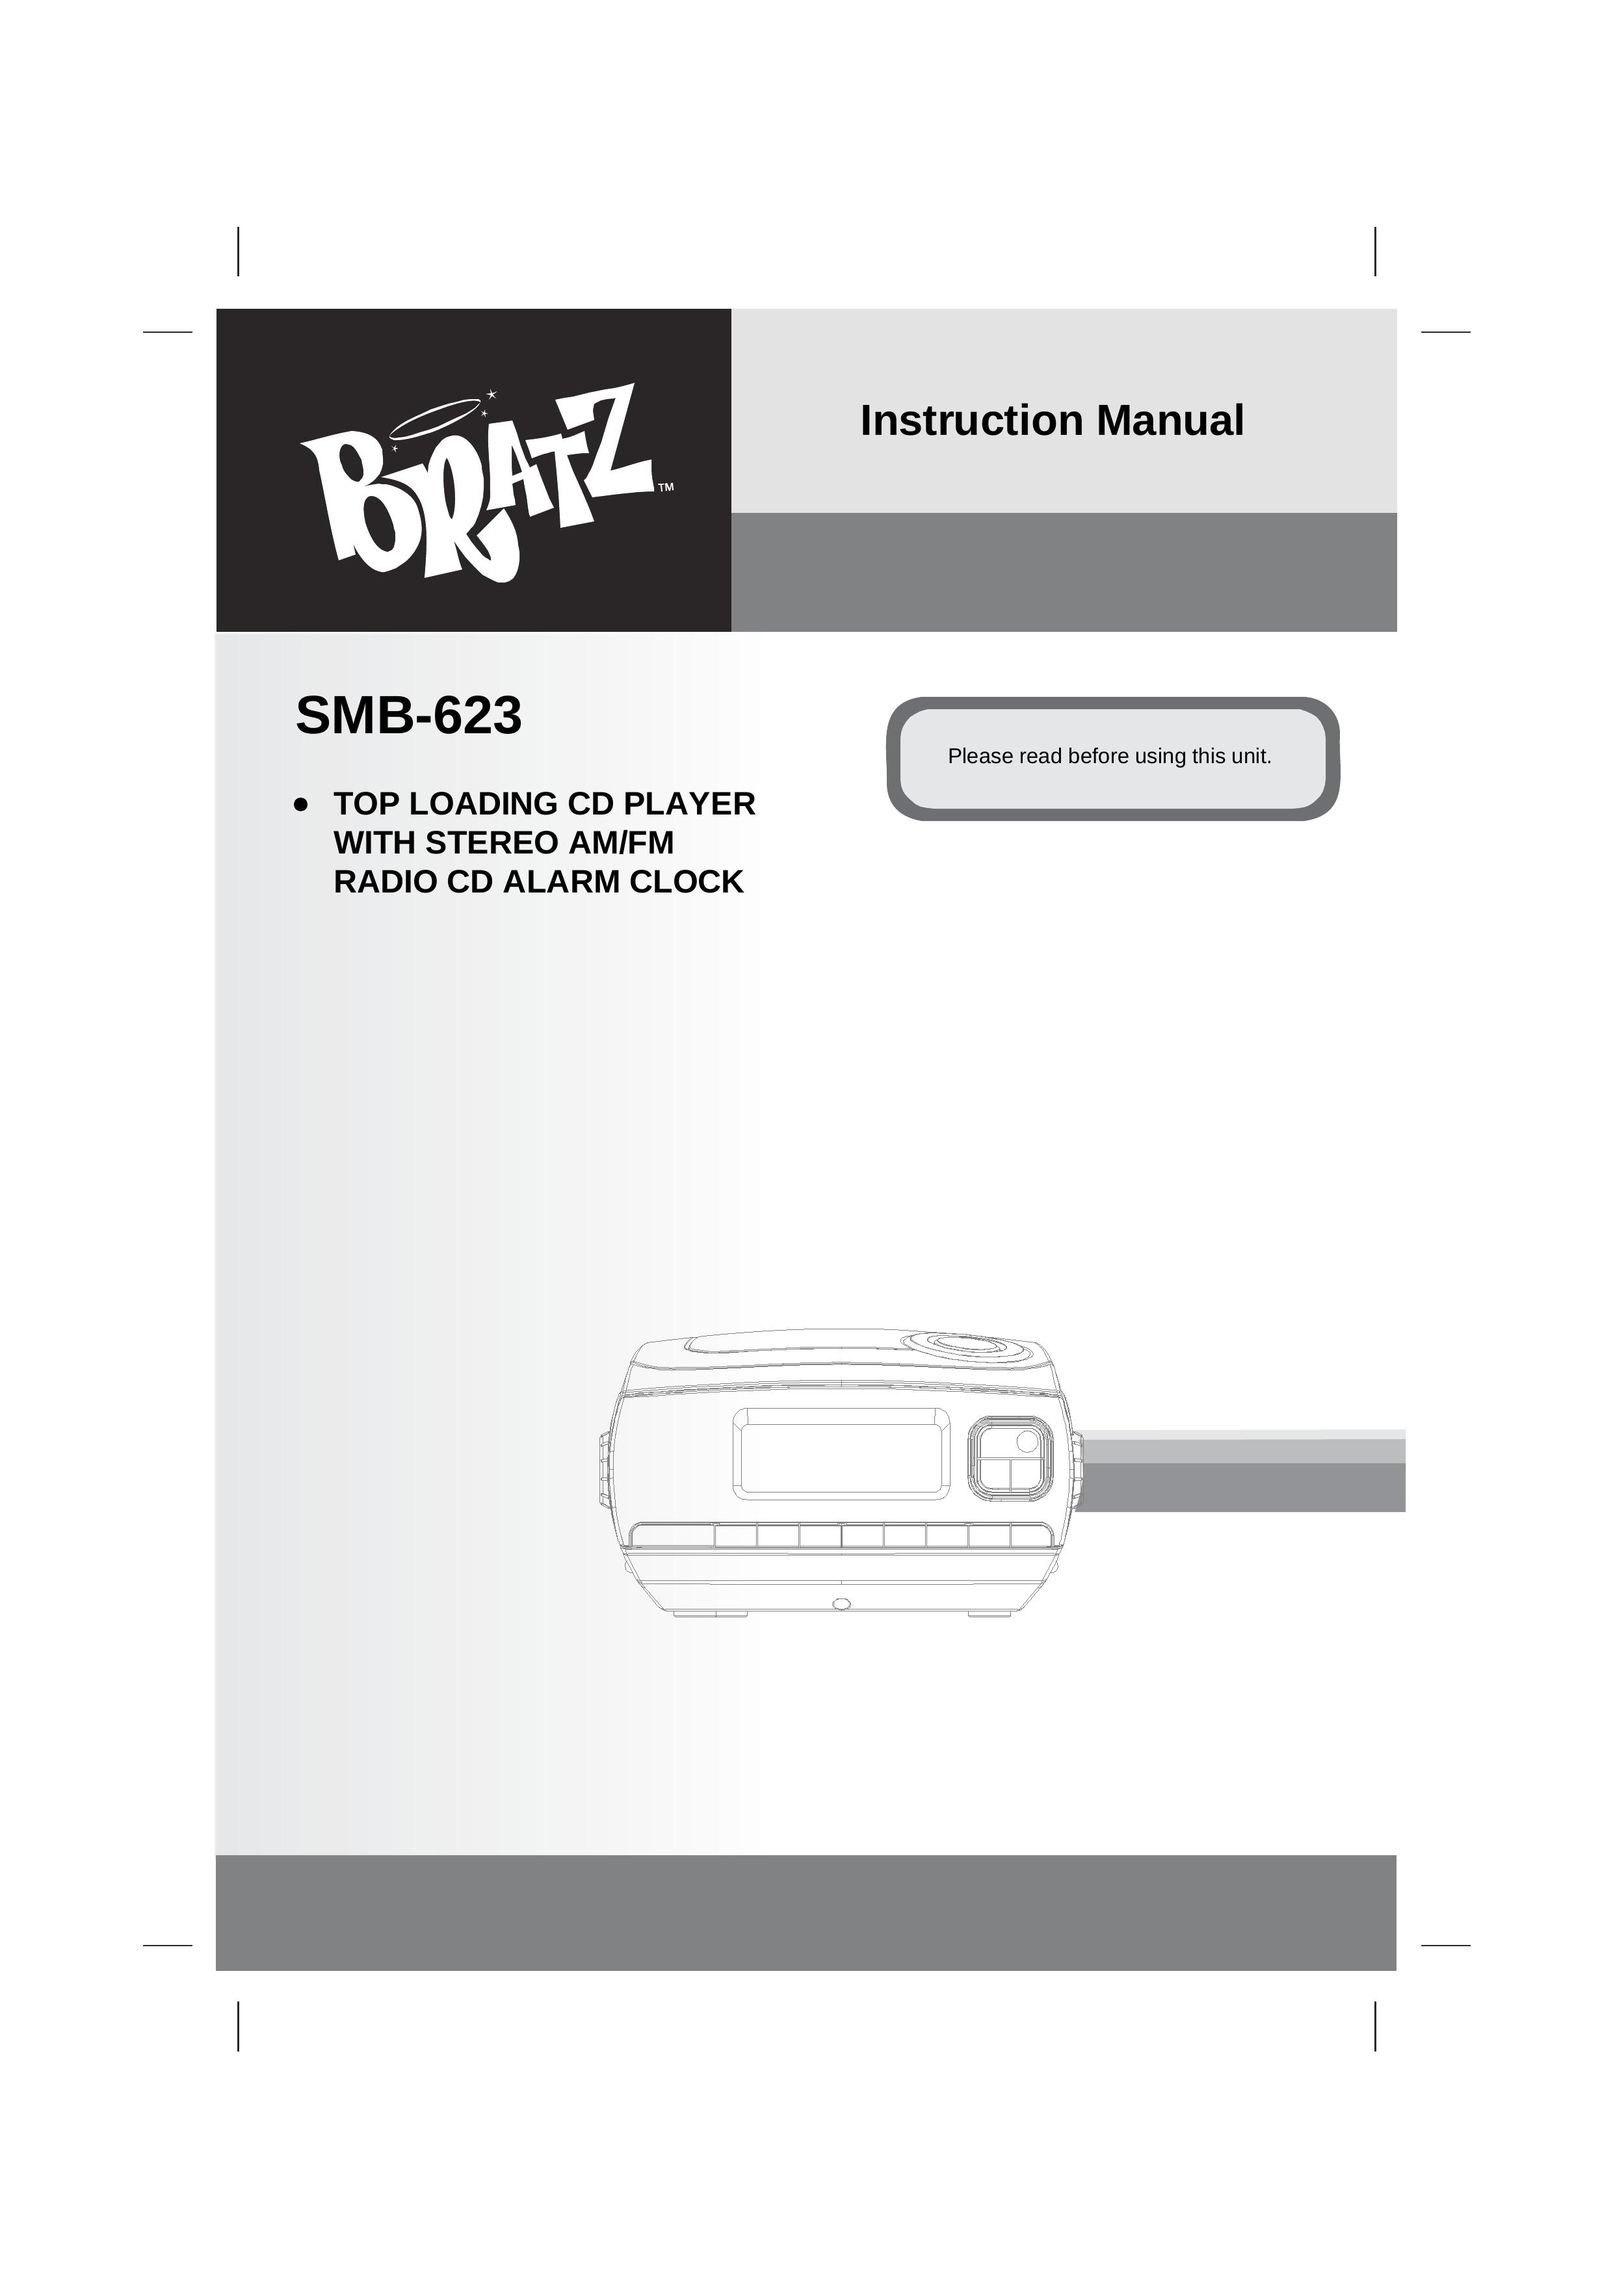 The Singing Machine SMB-623 CD Player User Manual